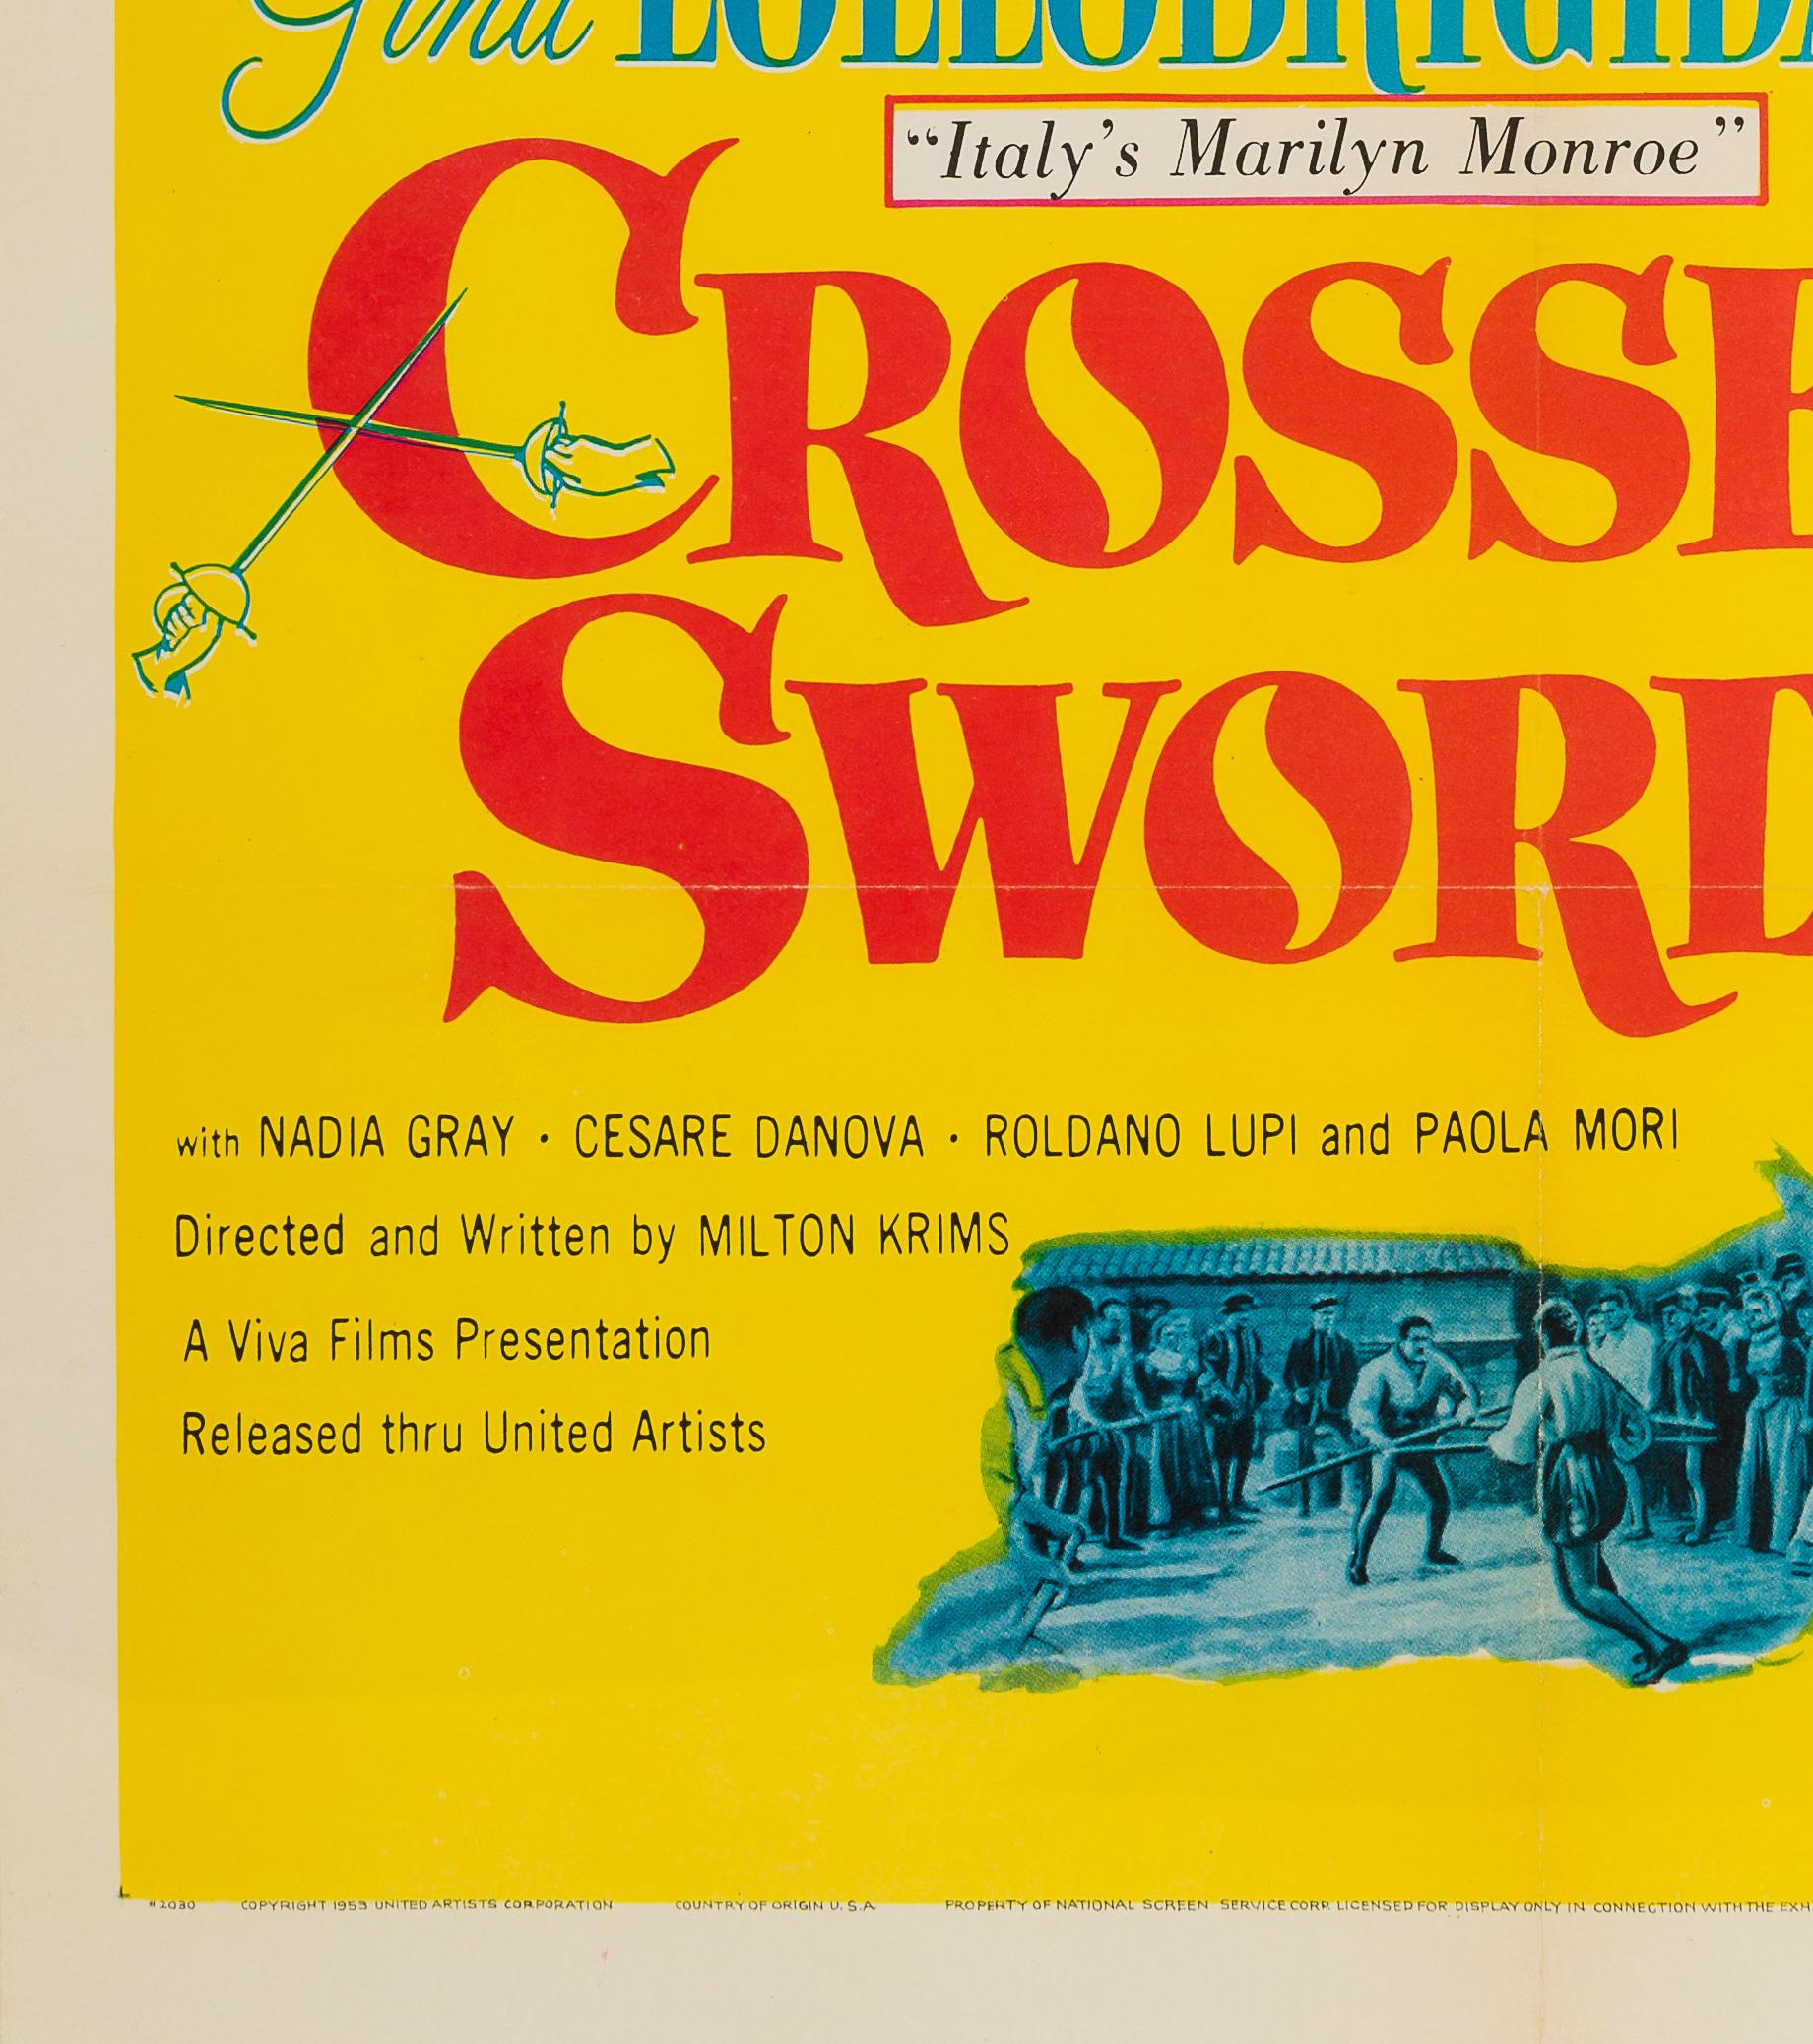 crossing swords movie 1950s